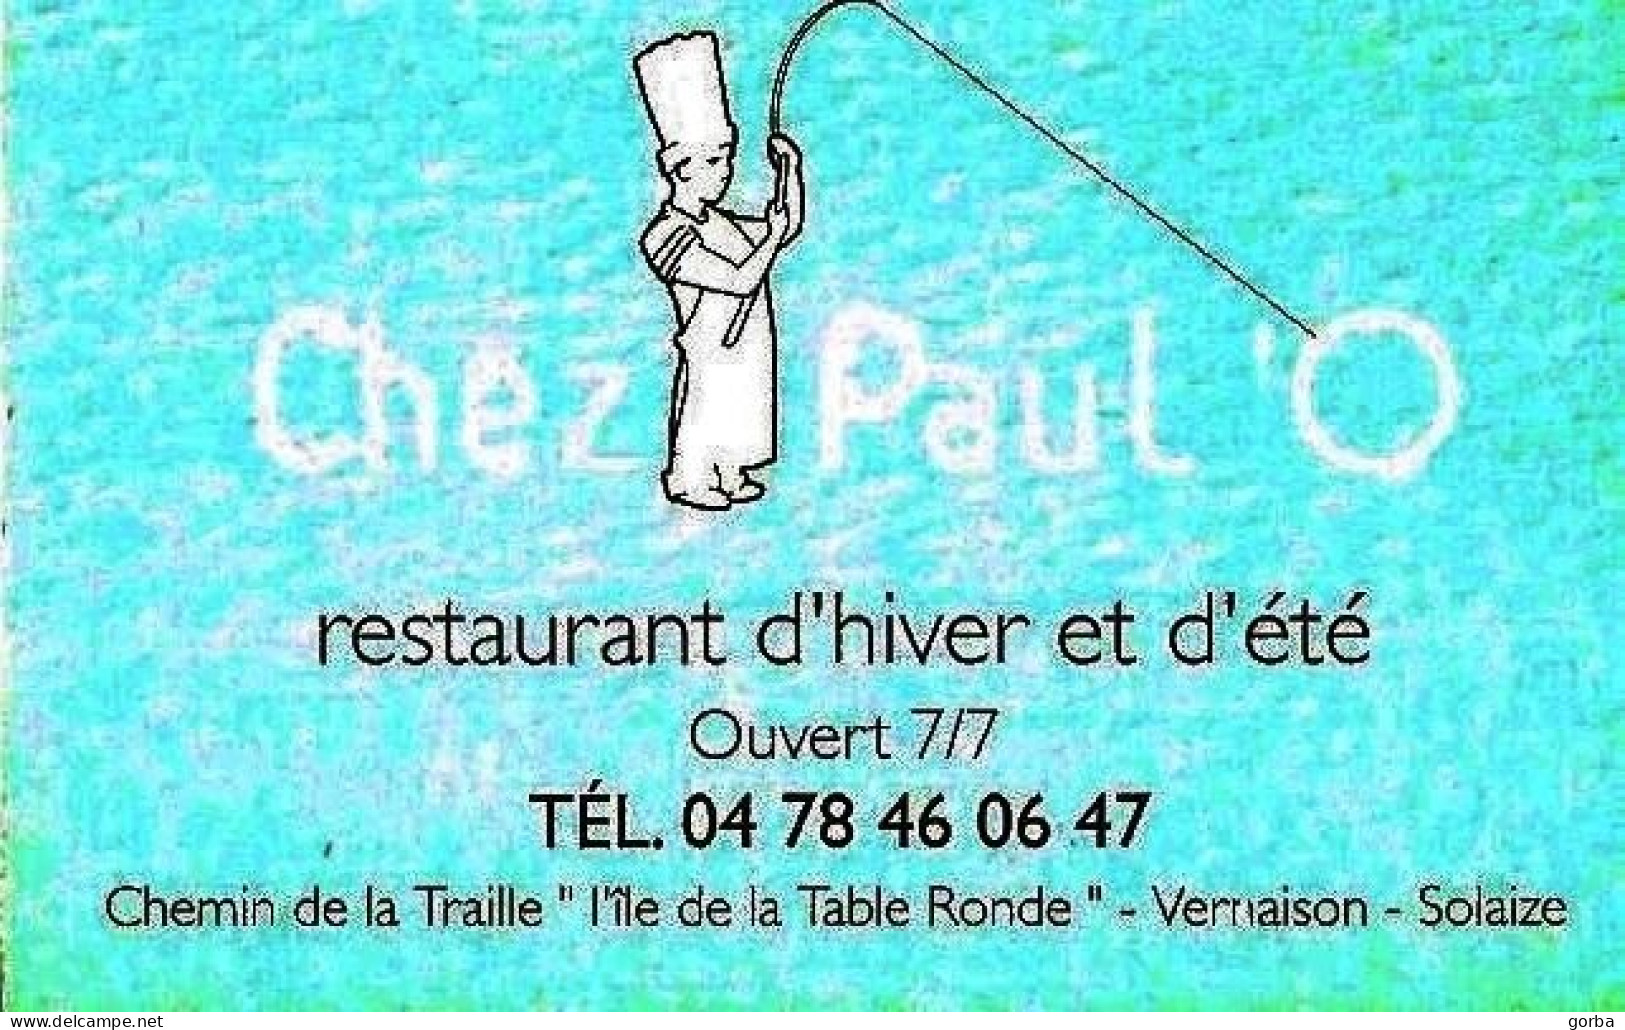 *Carte Visite Restaurant - Chez PAUL ' O à Vernaison-Solaize (69) - Visiting Cards